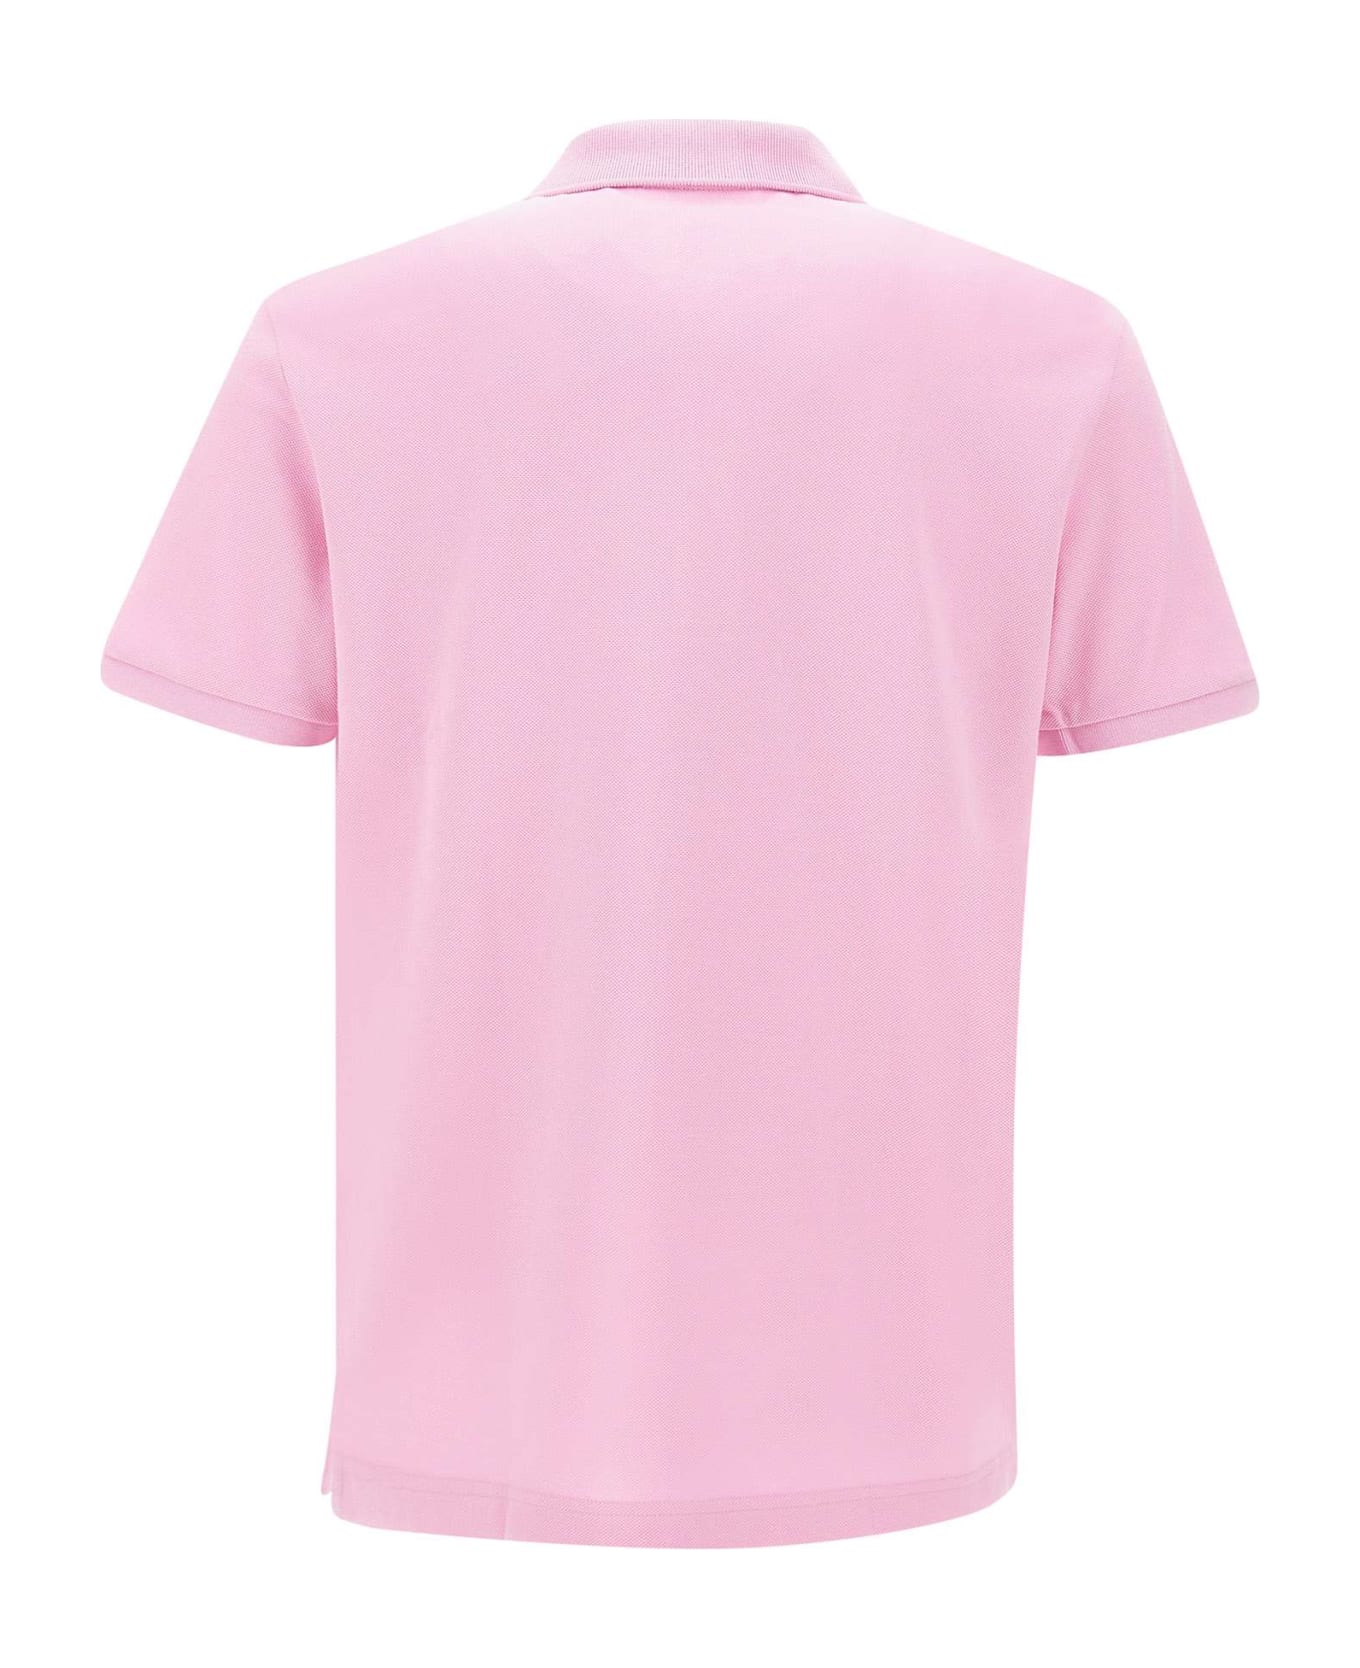 Lacoste Cotton Piquet Polo Shirt - PINK